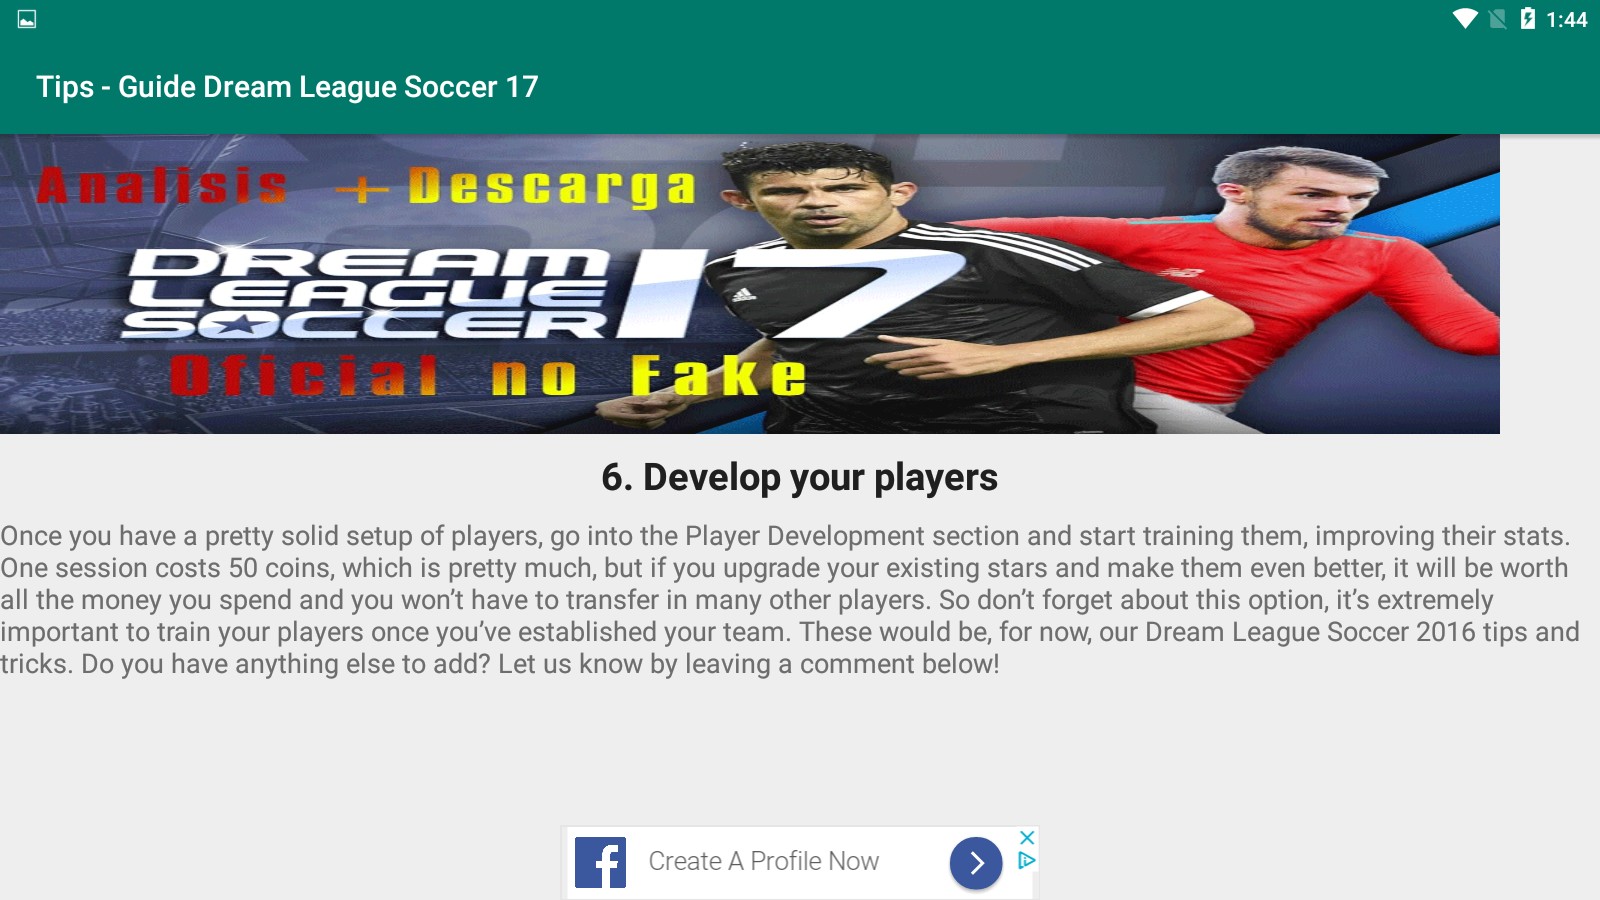 dream league soccer 17 tips and tricks